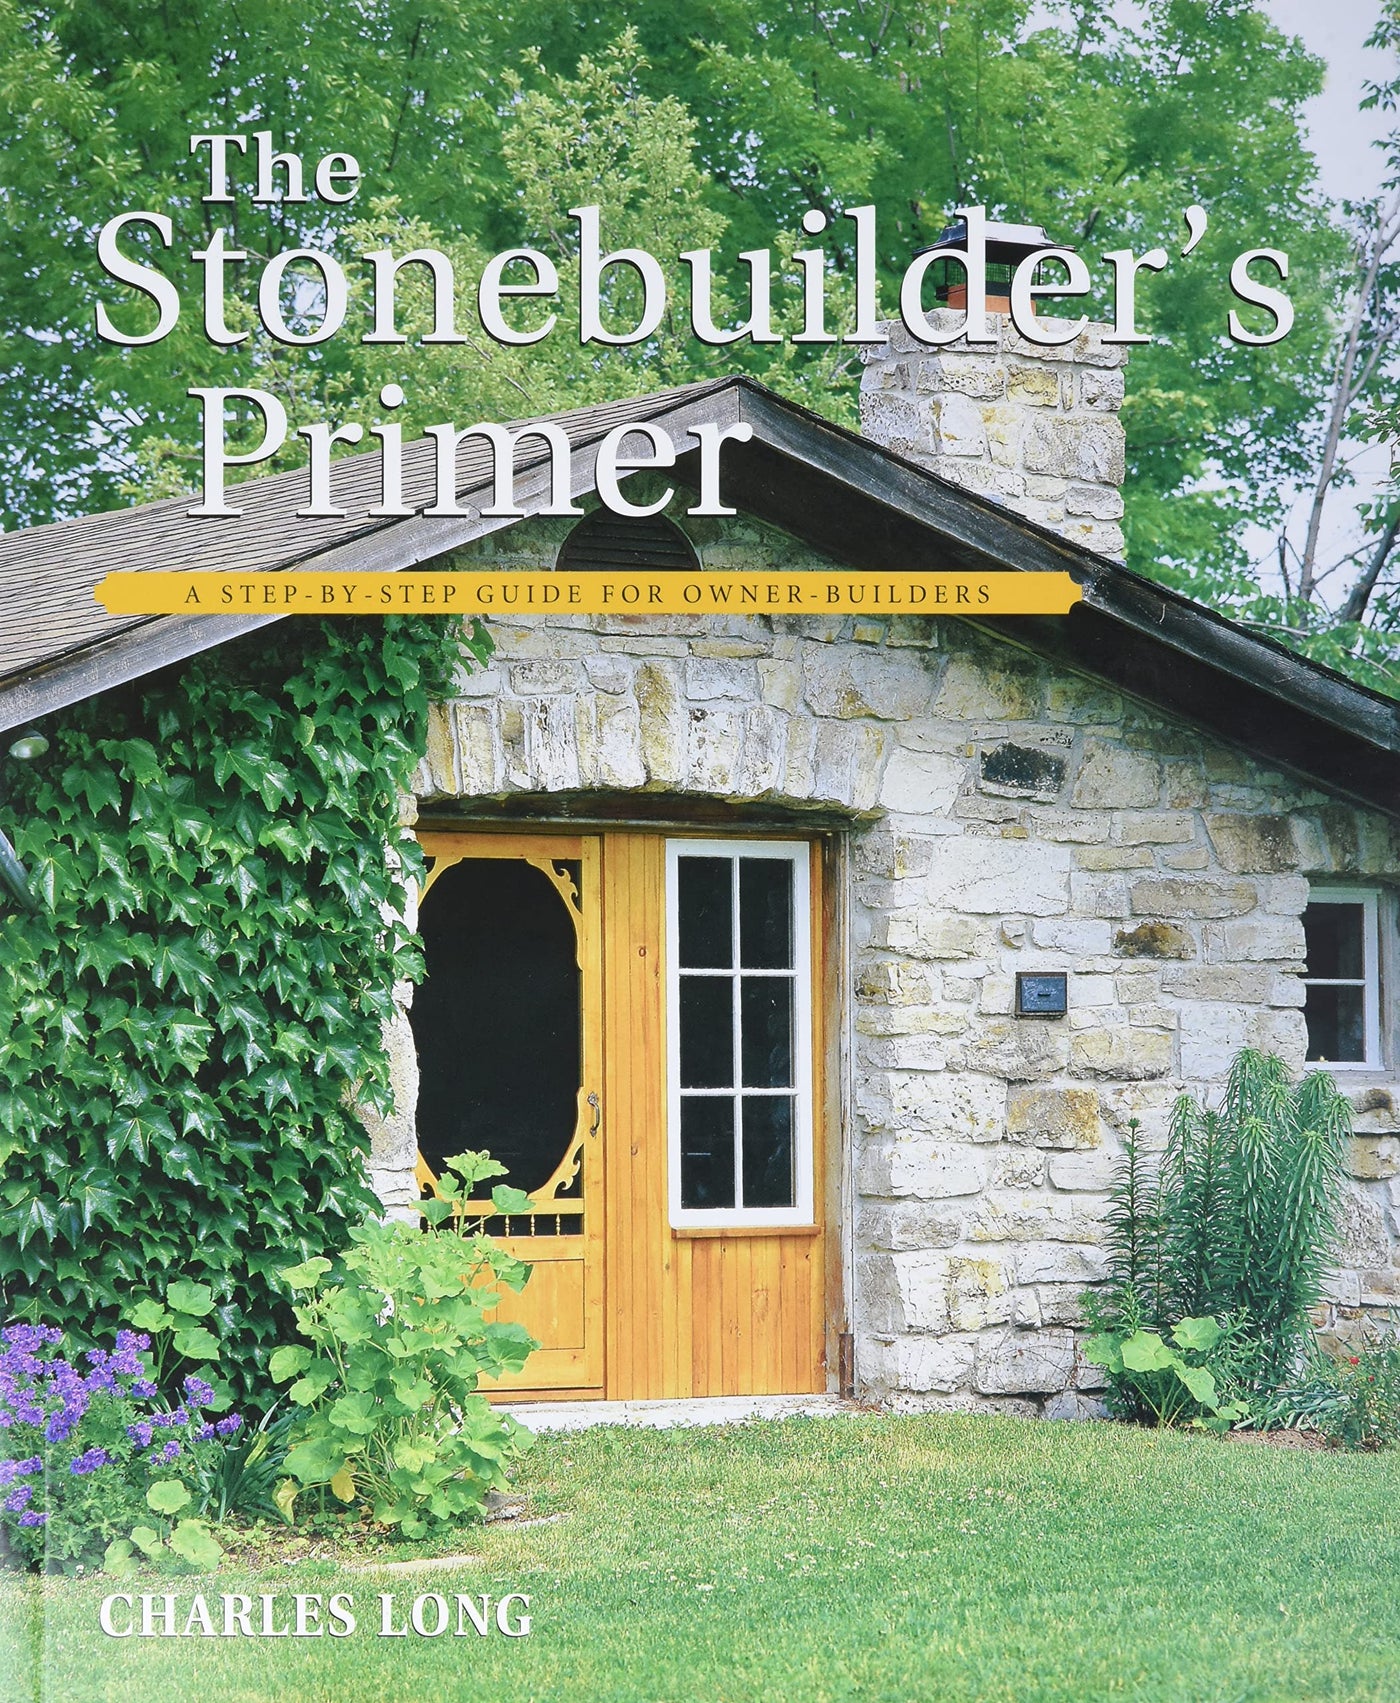 The Stone Builder's Primer